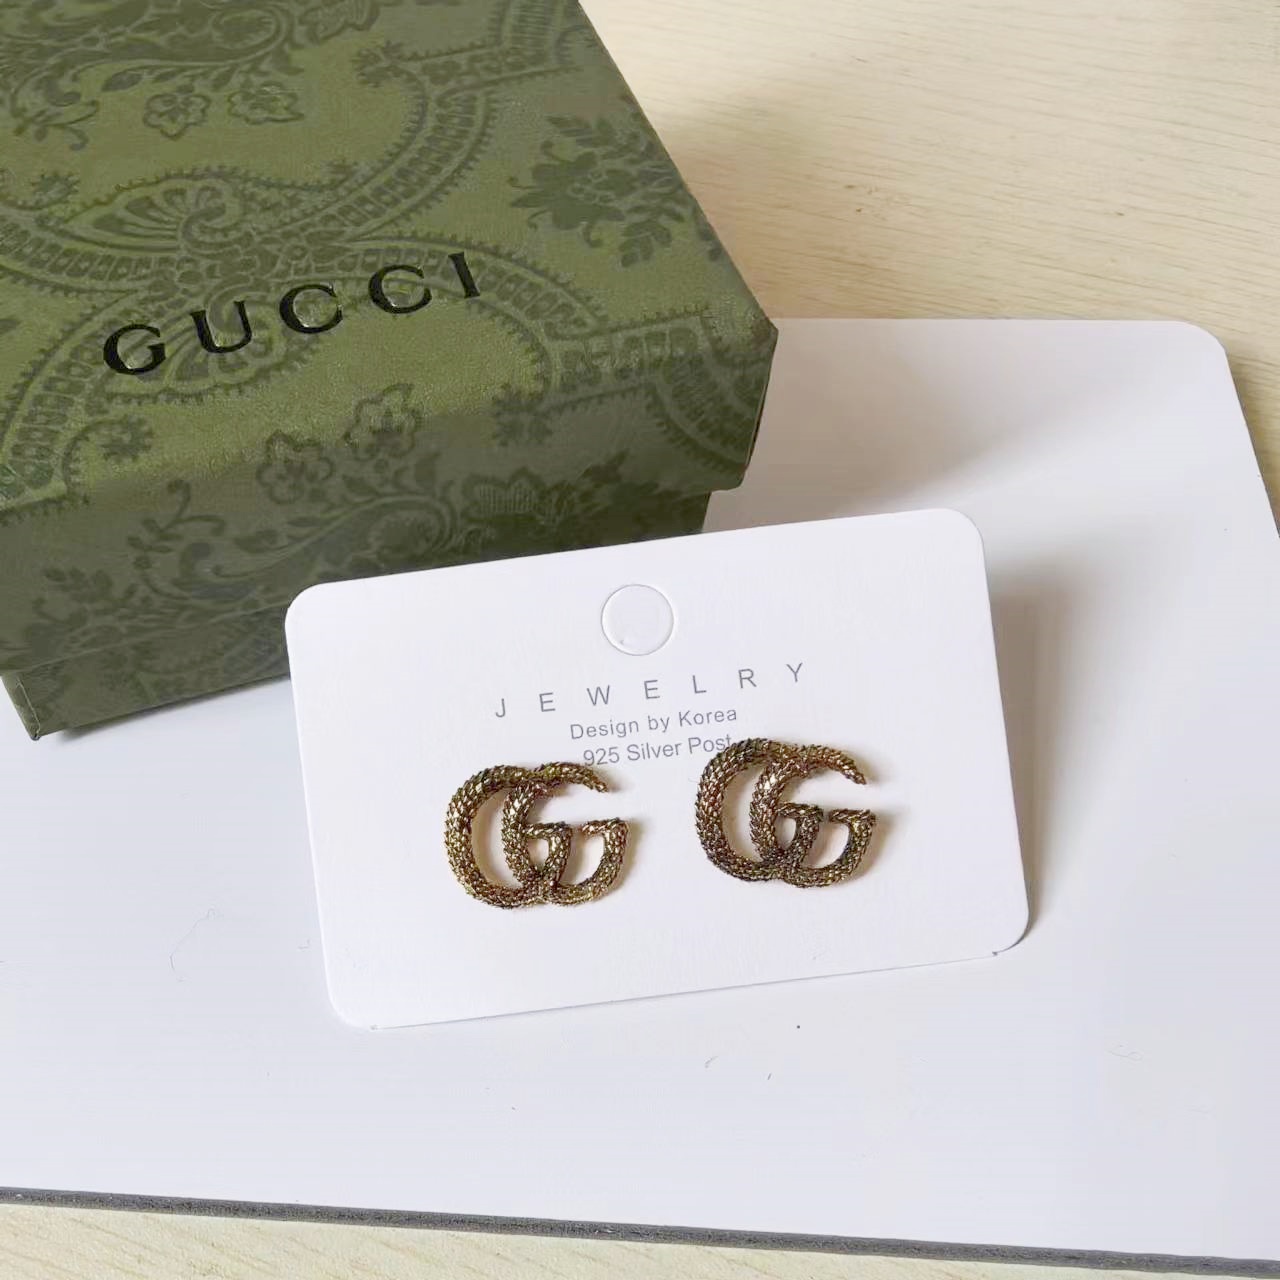 Big sale!Gucci bronze GG earrings